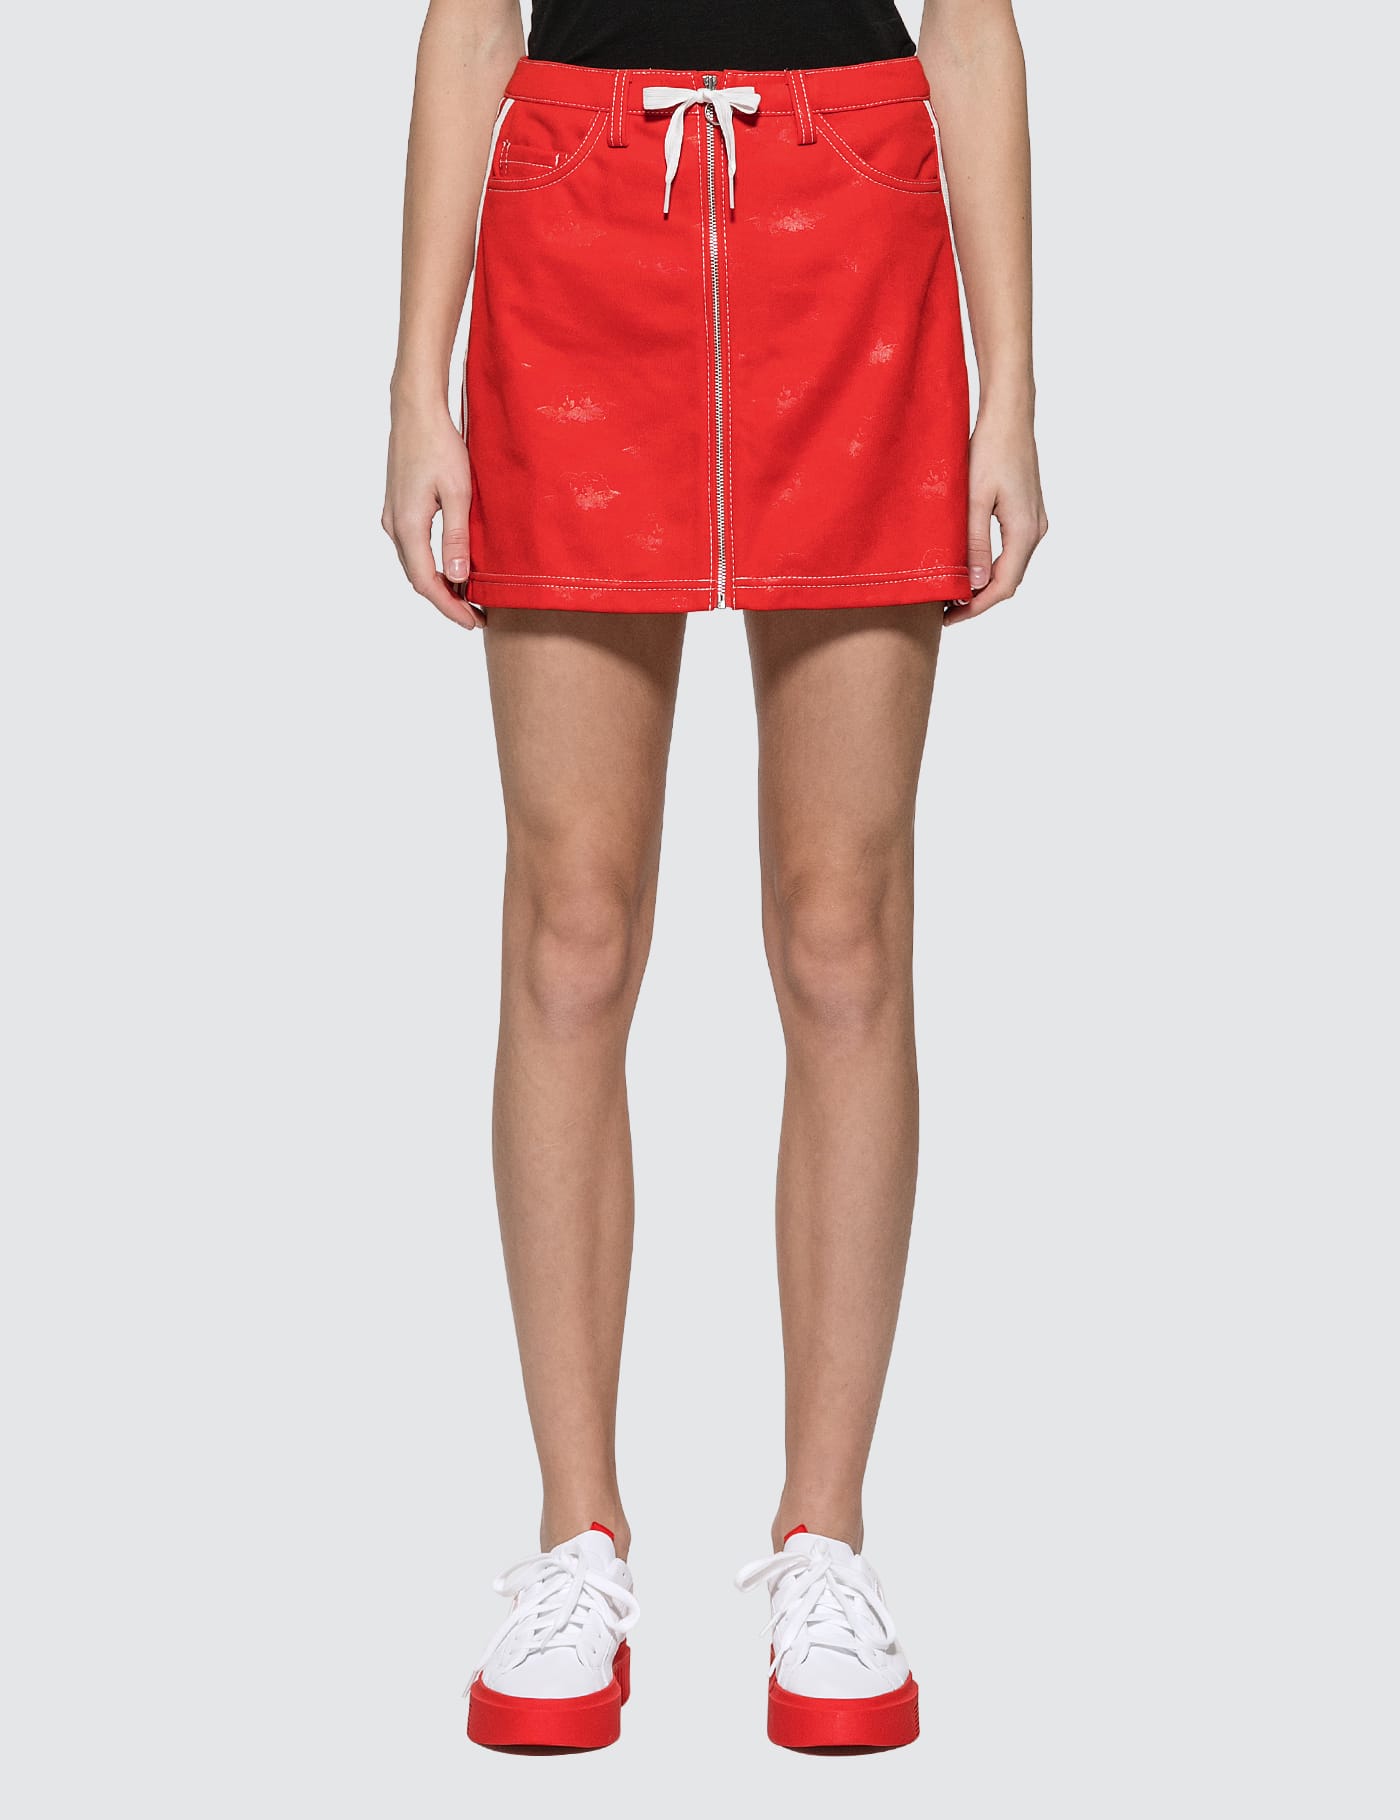 Adidas Originals x Fiorucci Skirt 